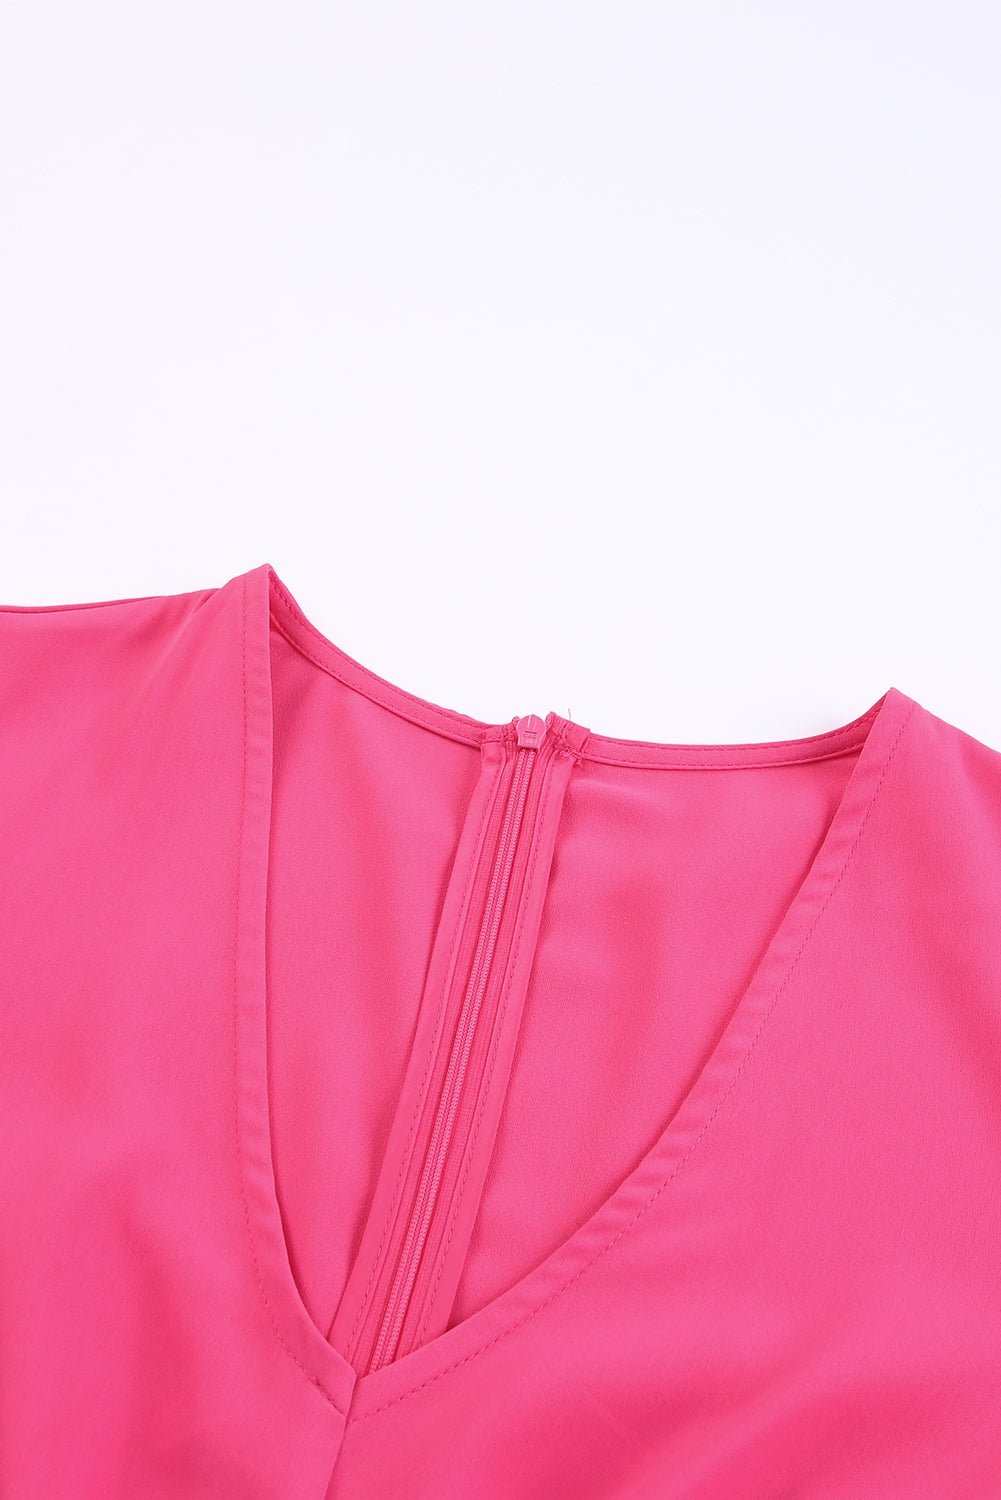 Balloon Sleeve Cutout Plunge Jumpsuit - Fashion Girl Online Store